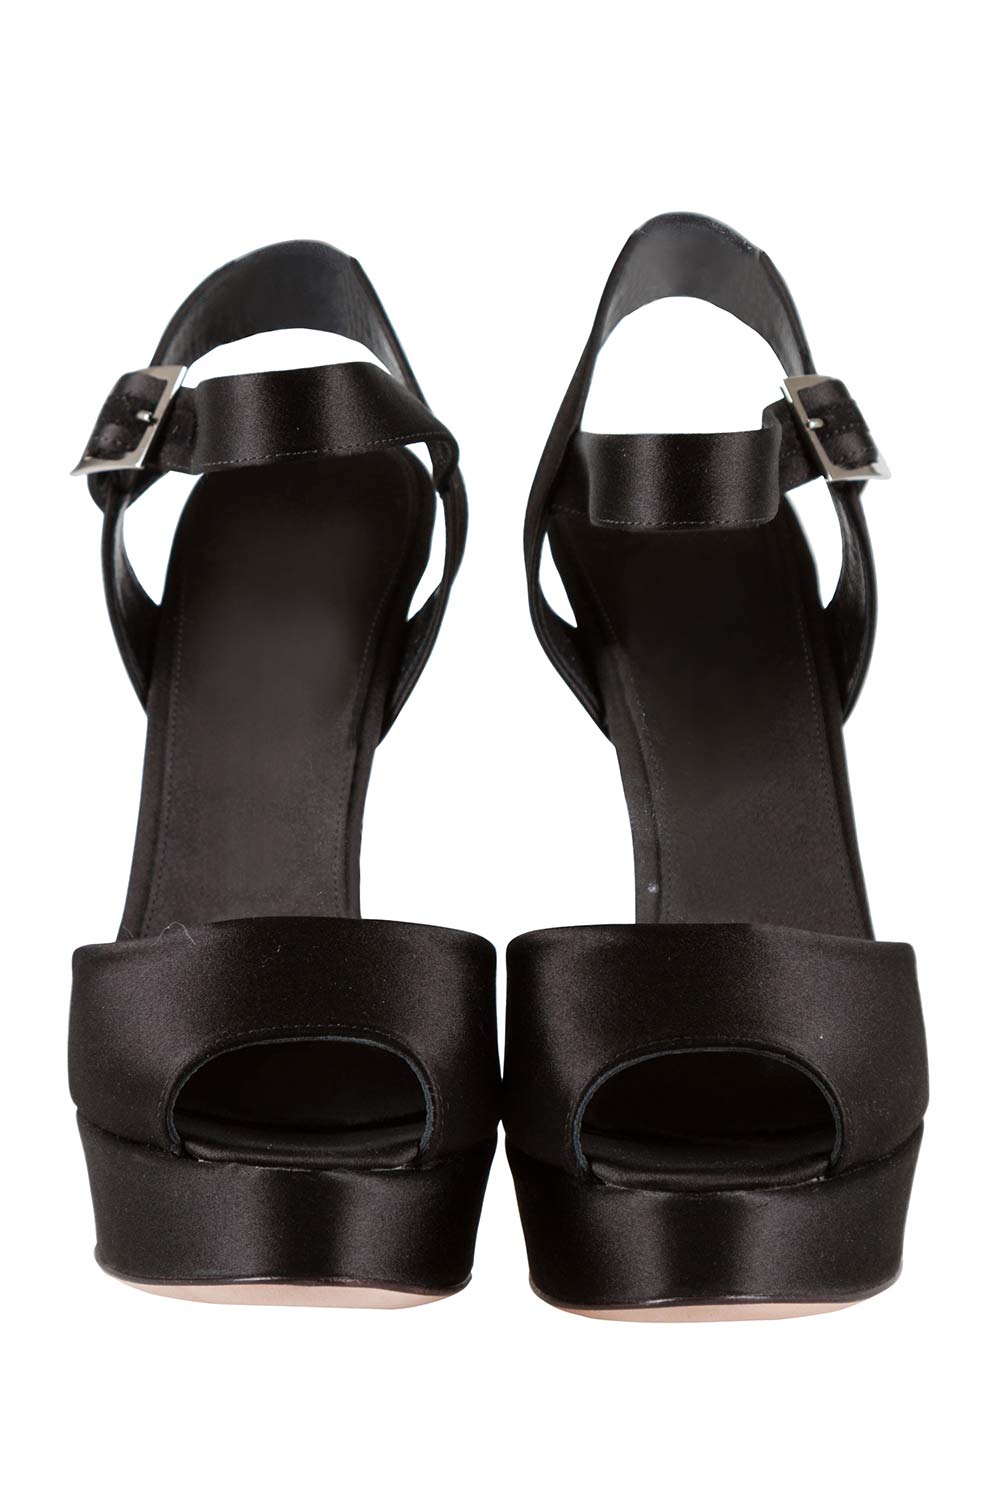 

Giambattista Valli Black Satin Peep Toe Ankle Strap Platform Sandals Size